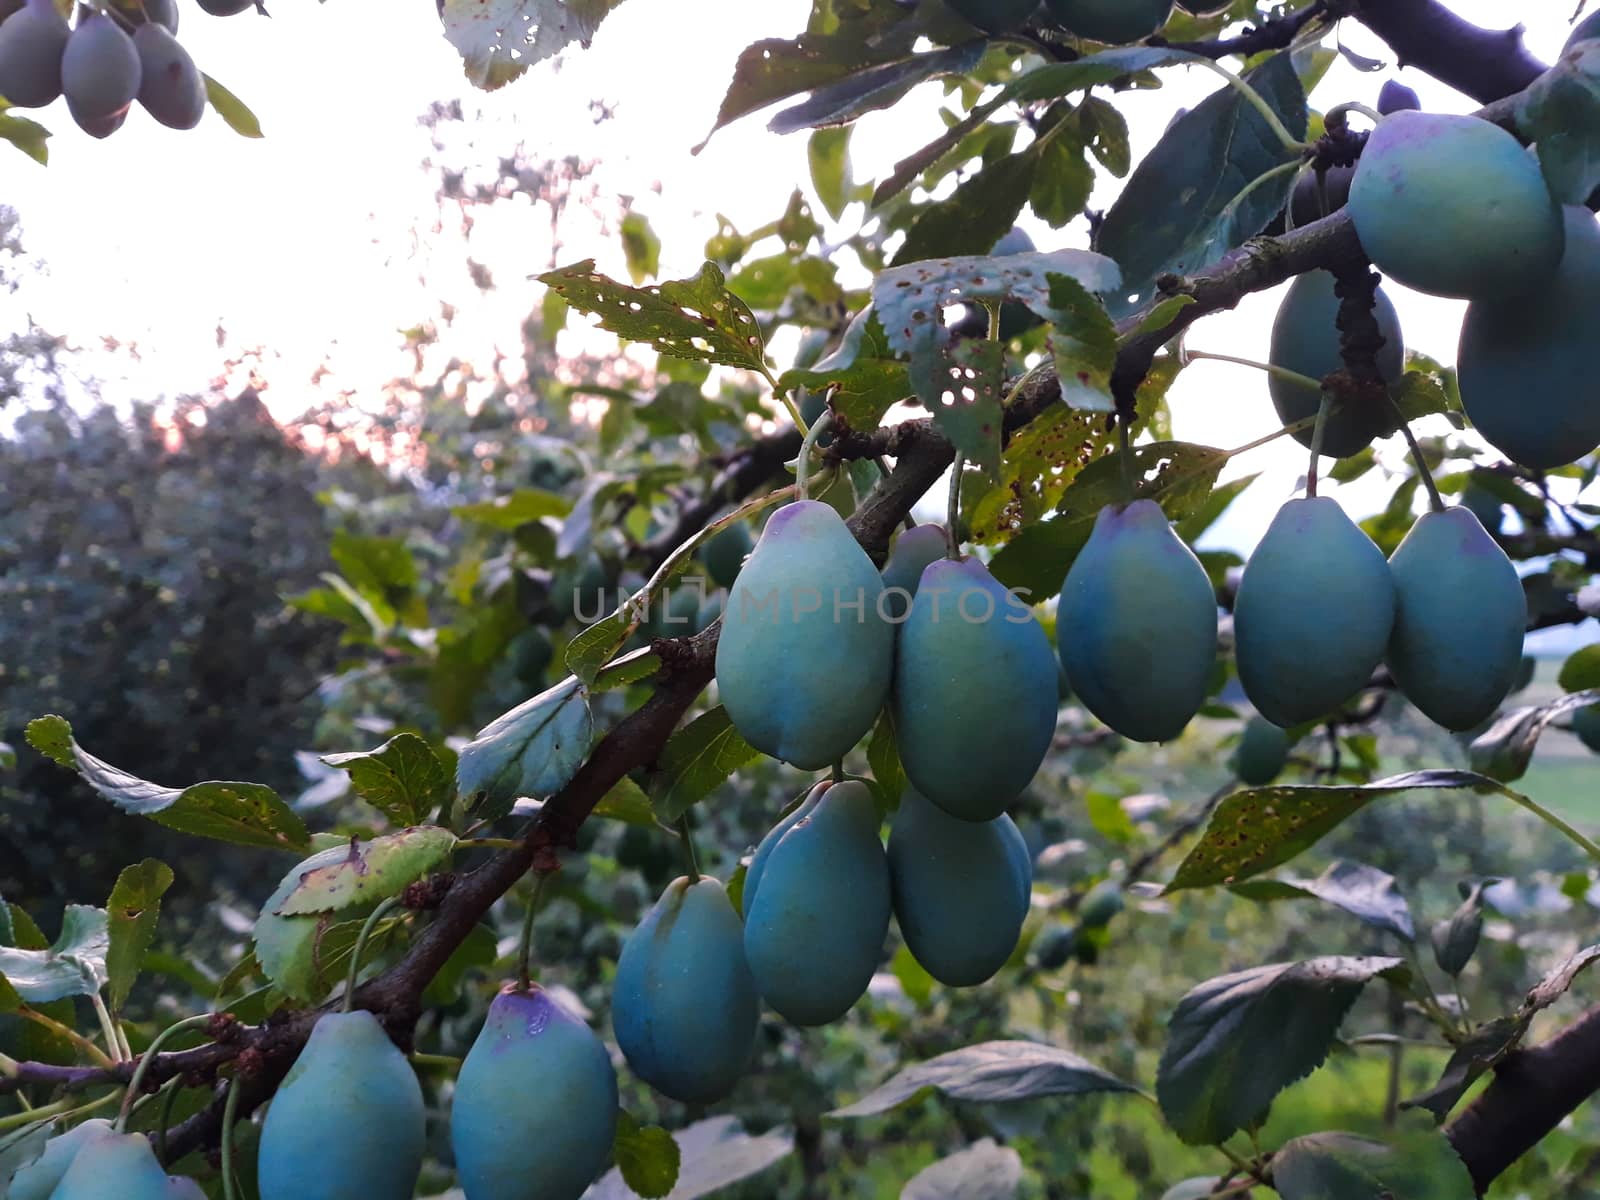 A row of green, unripe plums on a branch. Zavidovici, Bosnia and Herzegovina.